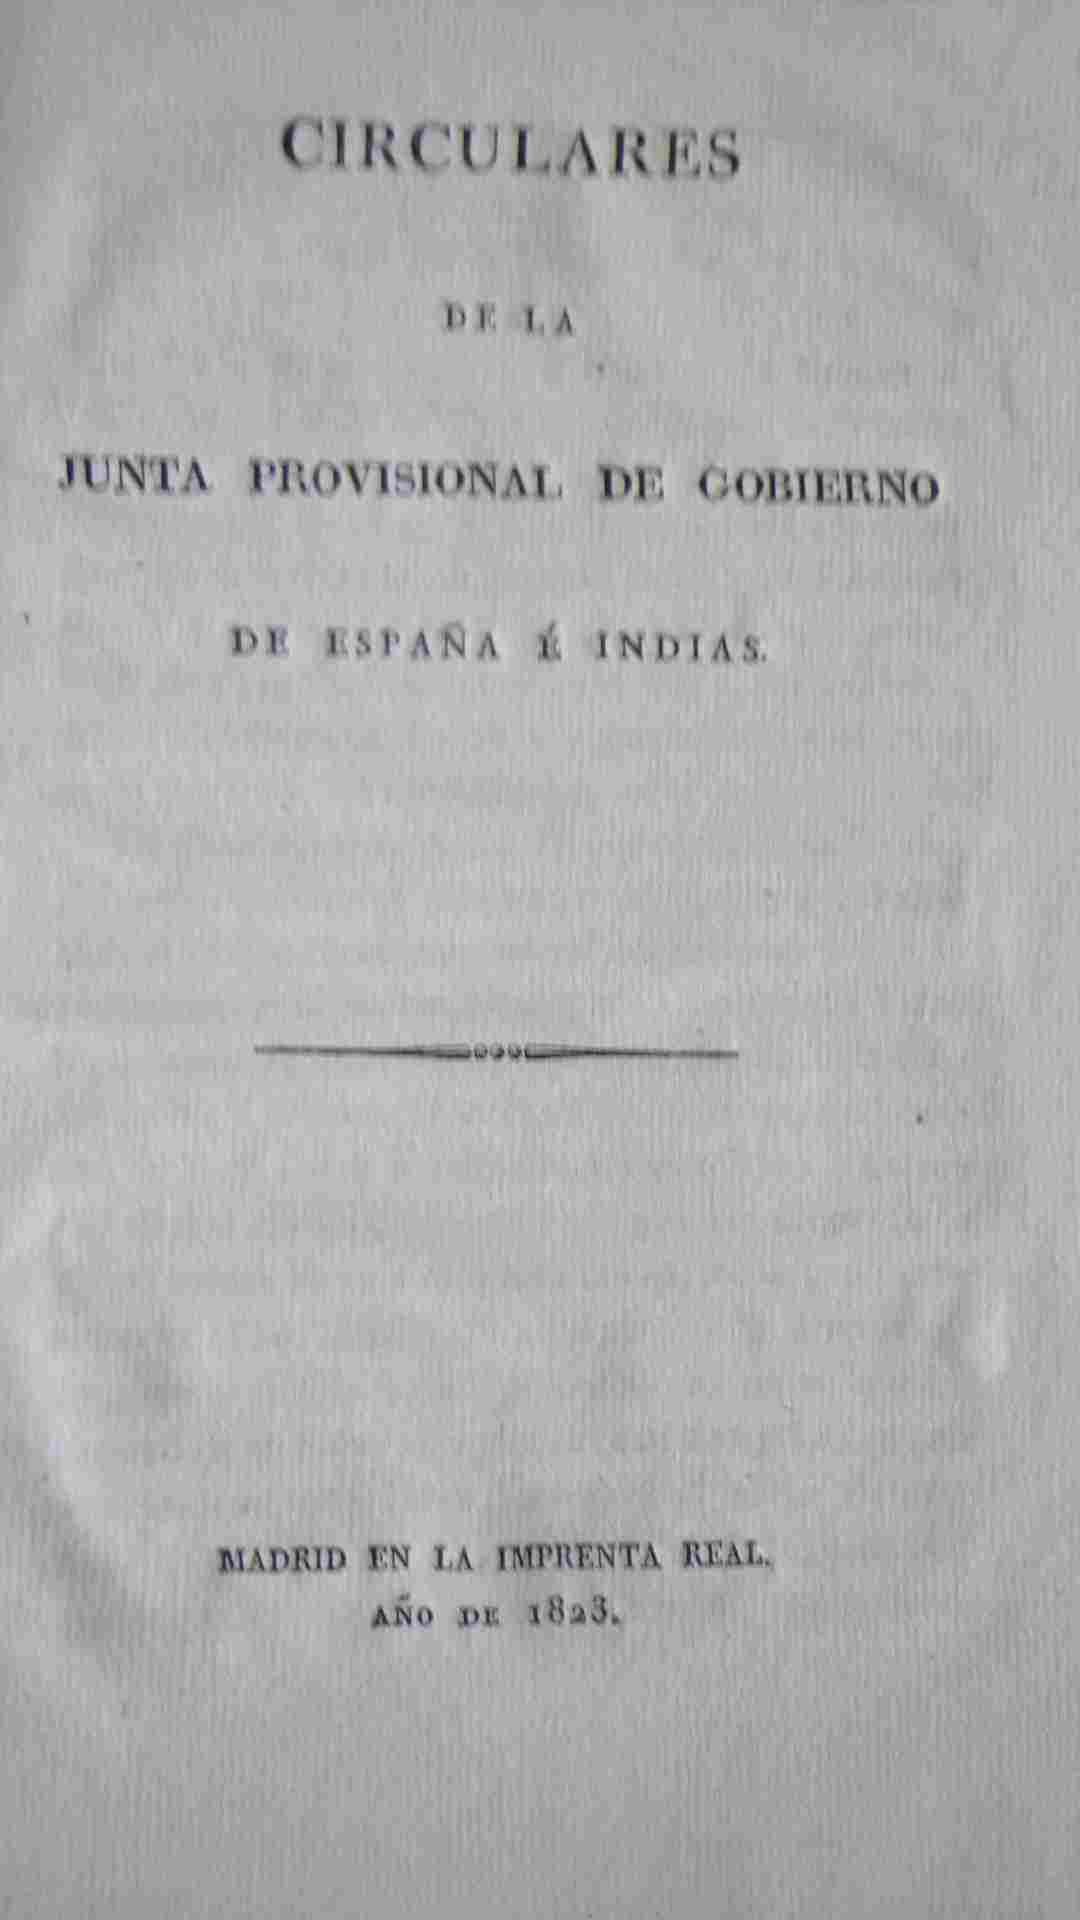 Circulares de la junta provisional de gobierno de España e Indias